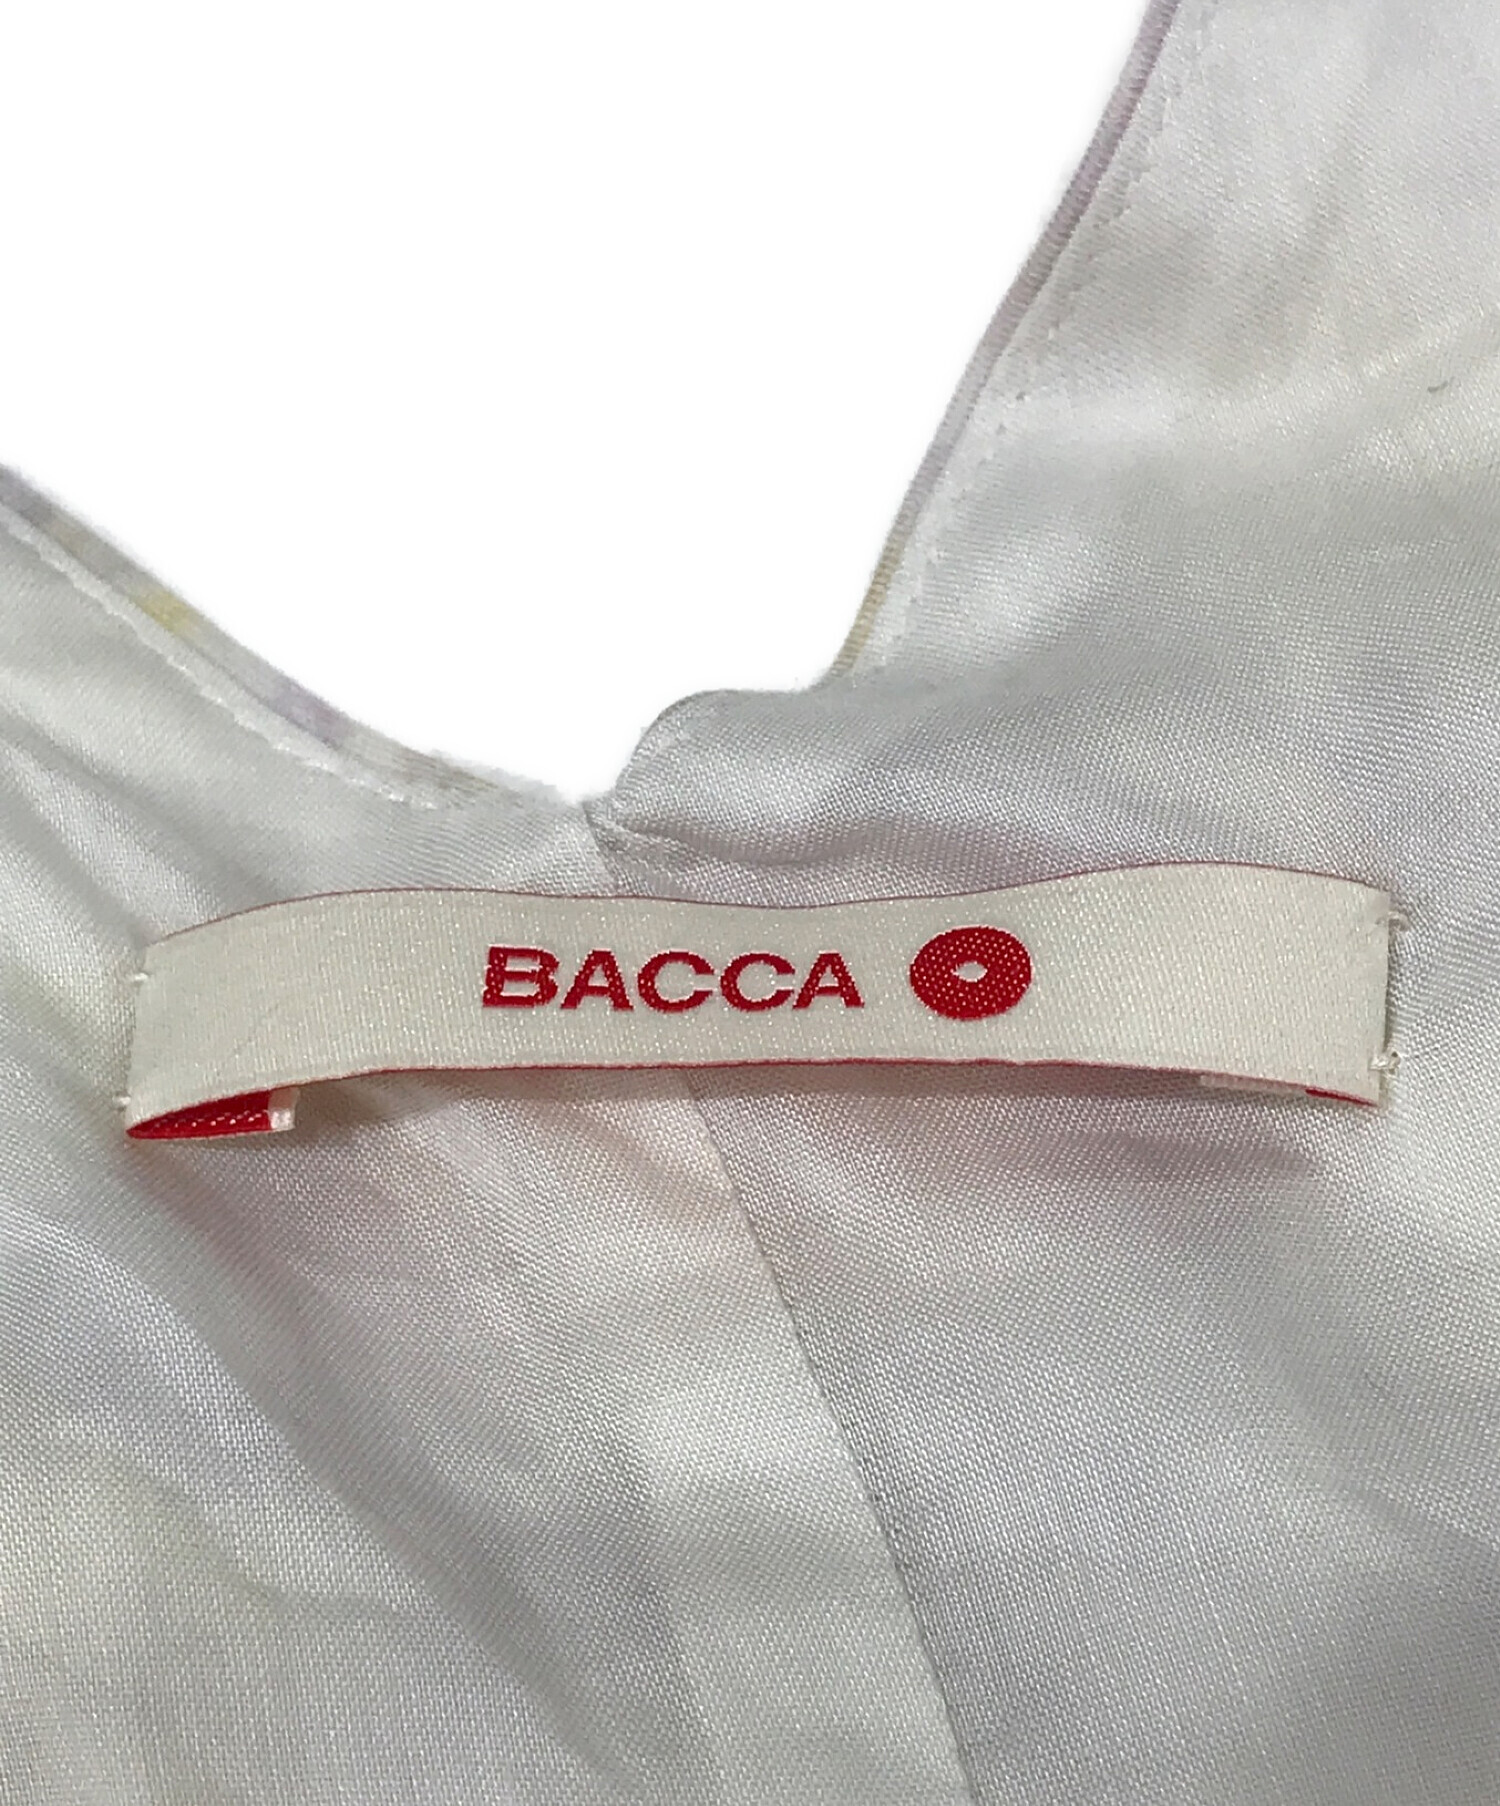 BACCA (バッカ) タイダイプリント キャミソールワンピース パープル サイズ:SIZE 36